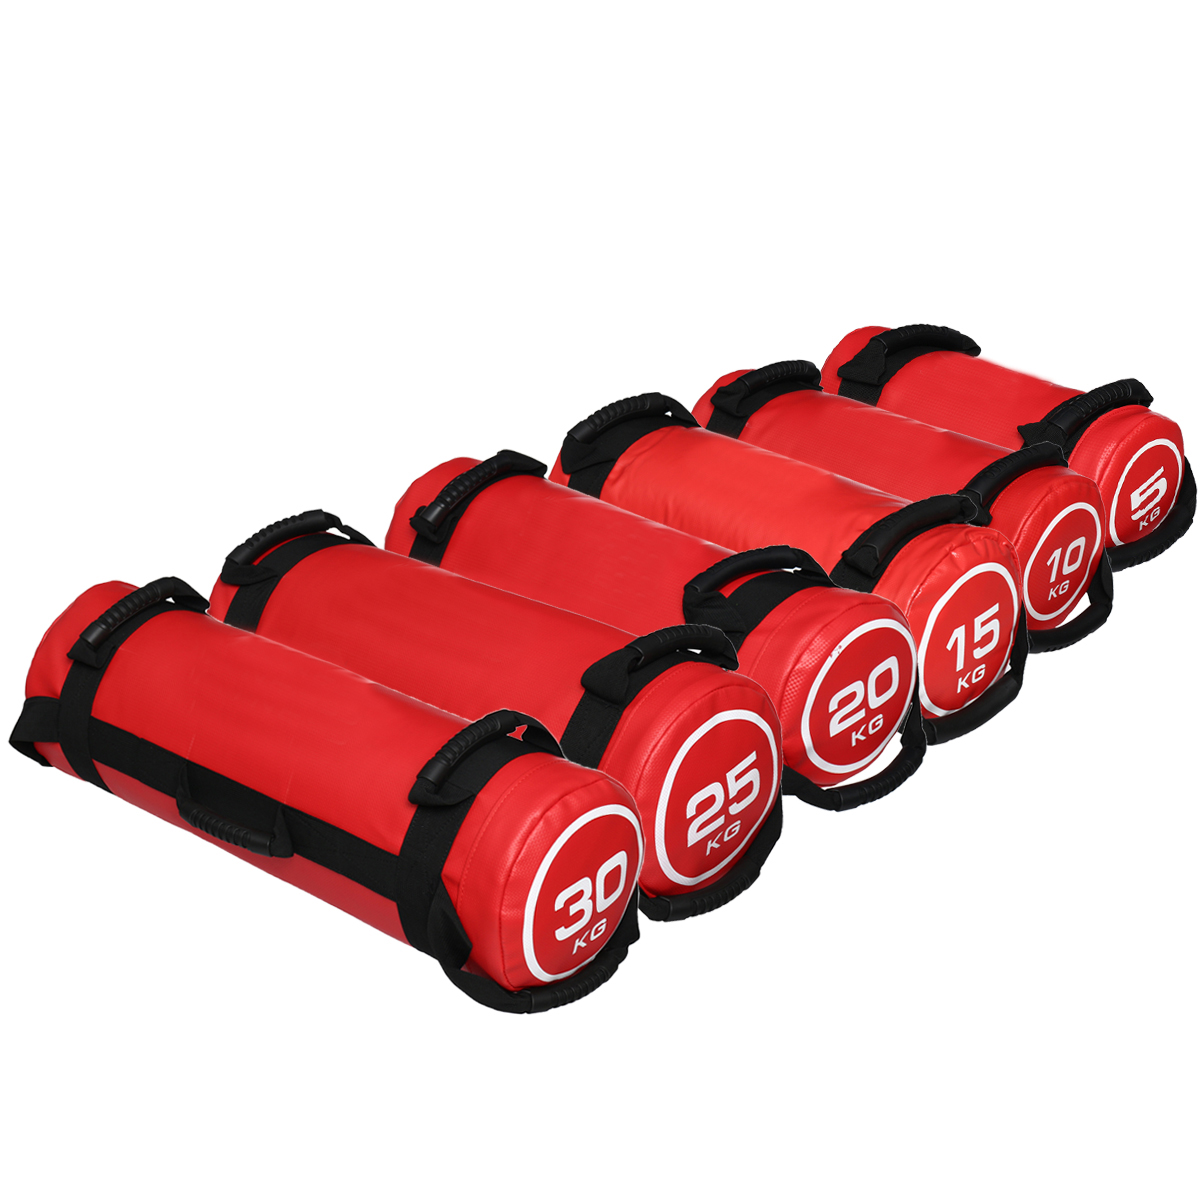 15-30KG-Red-Power-Bag-Weight-Lifting-Sandbag-Outdoor-Indoor-Gym-Fitness-Training-Sandbag-1545896-3